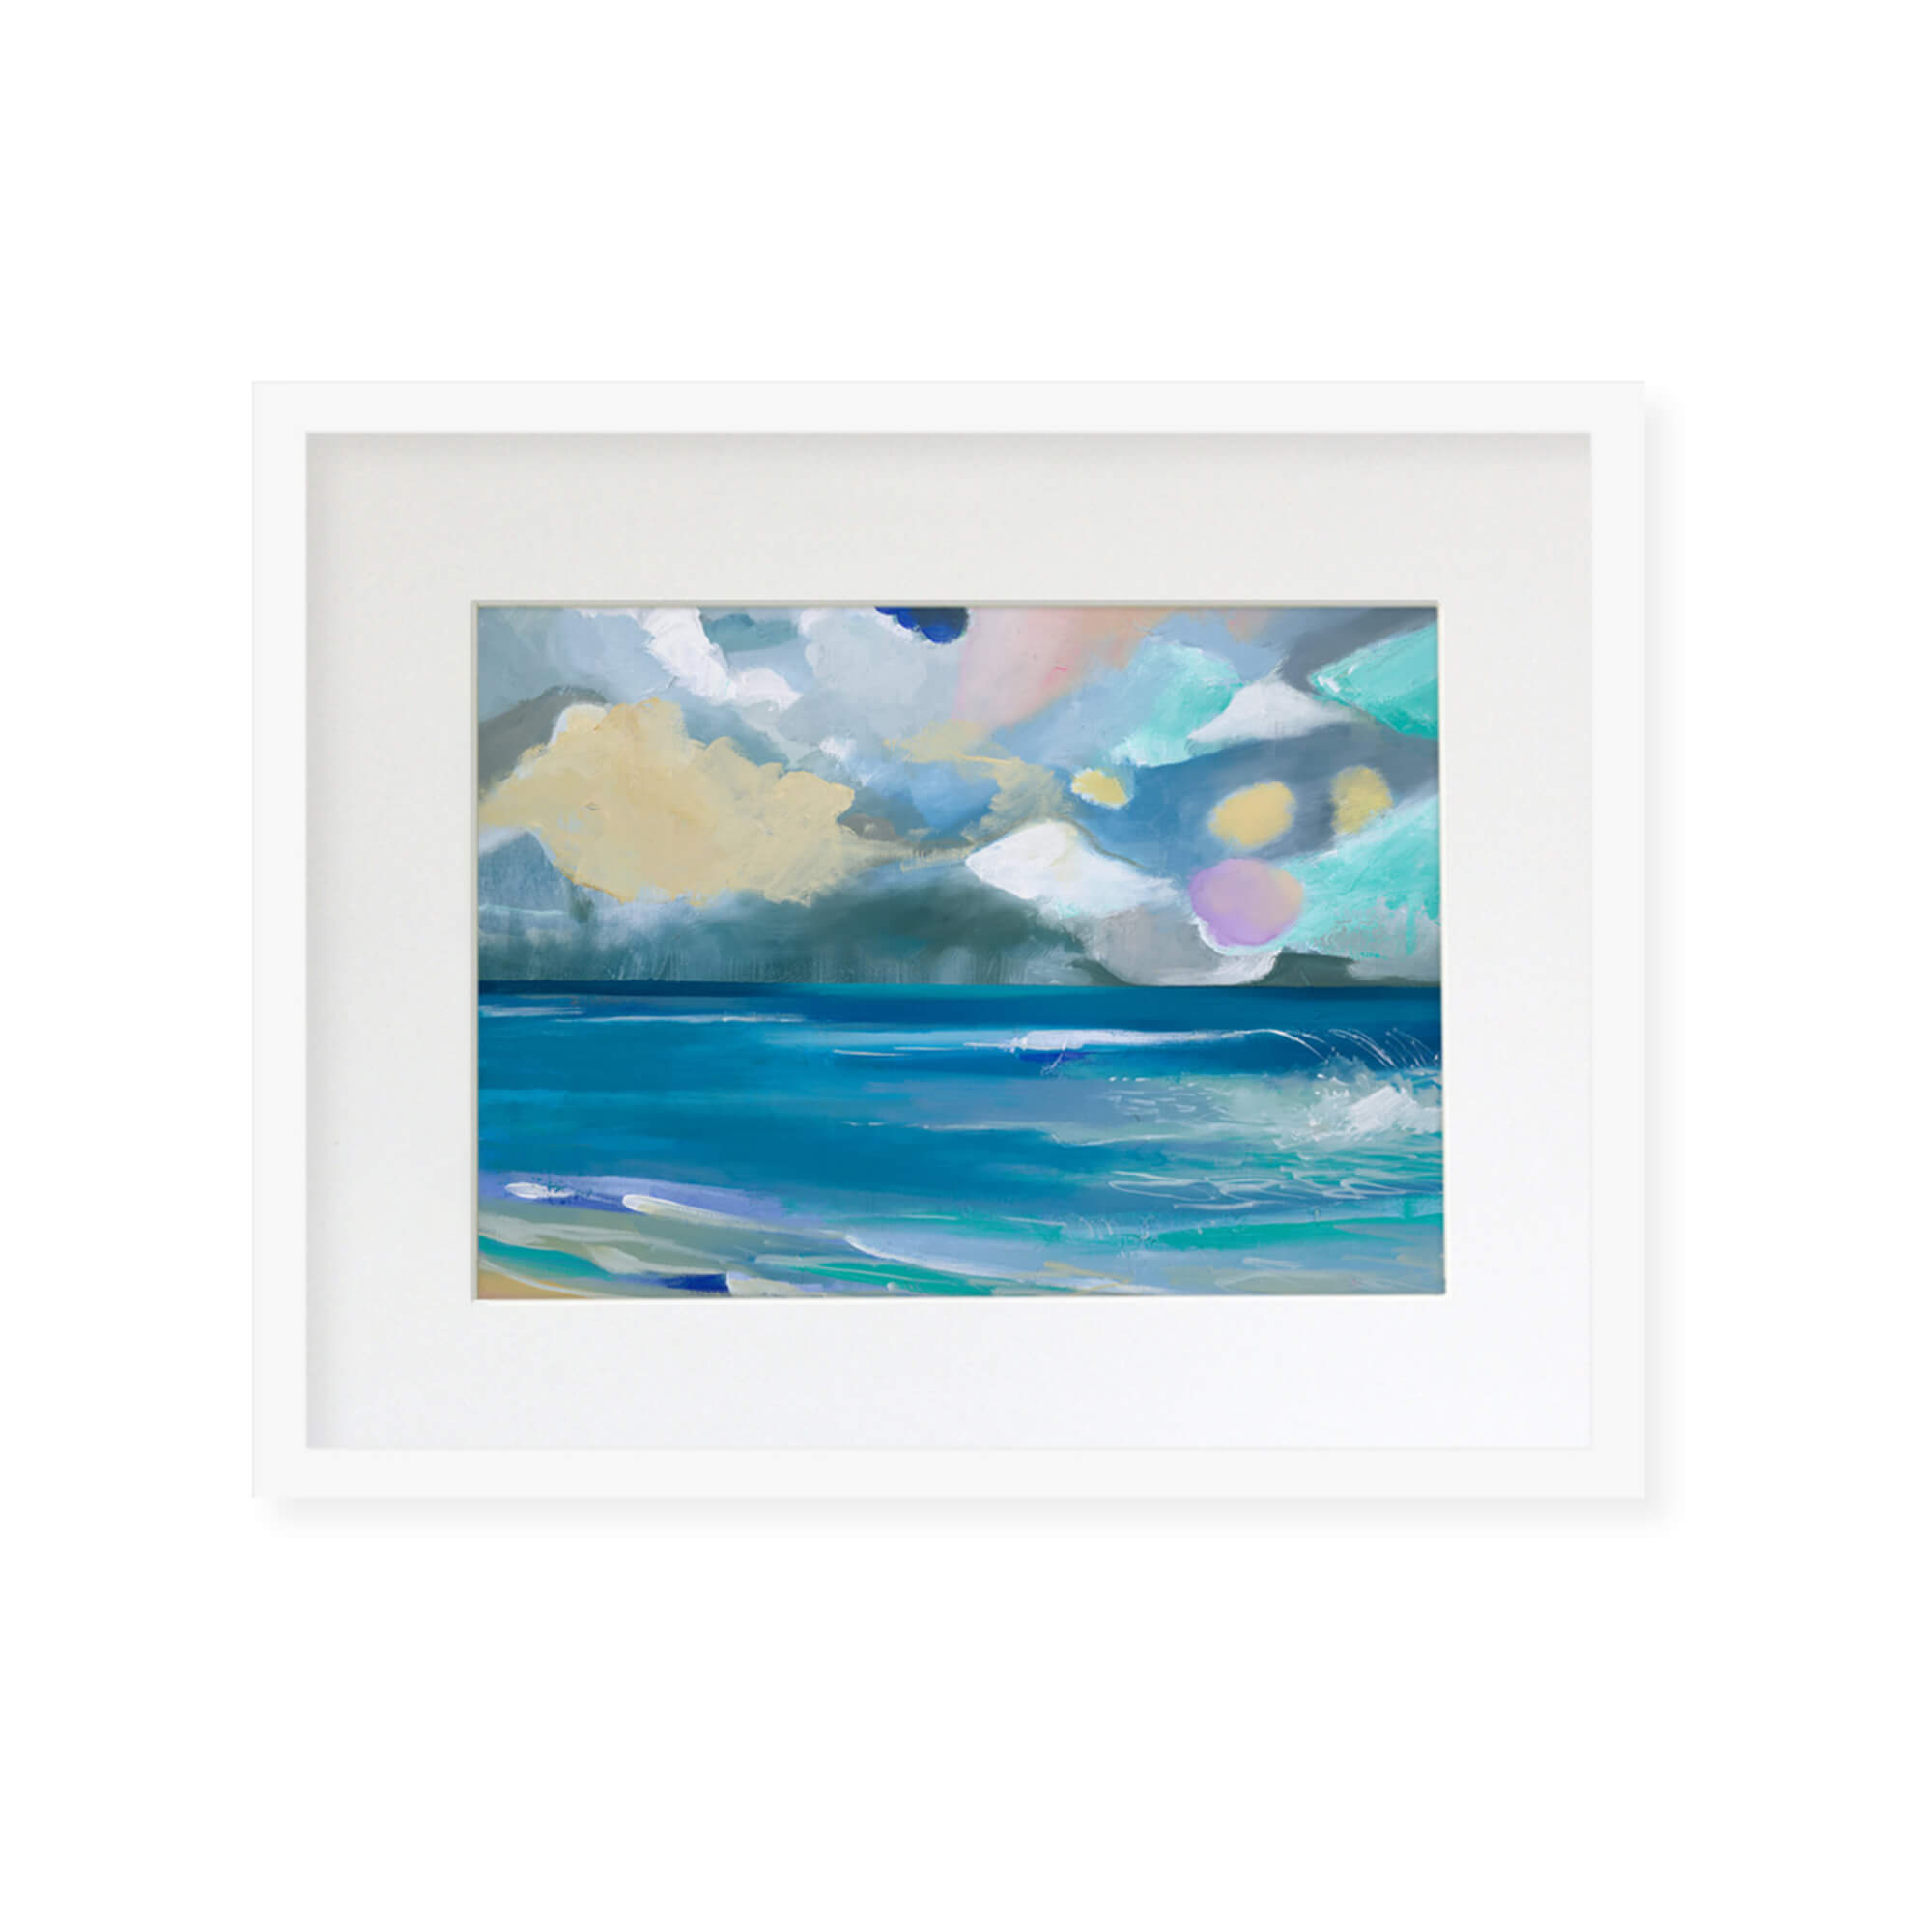 Framed matted art print of a serene seascape by Hawaii artist Saumolia  Puapuaga